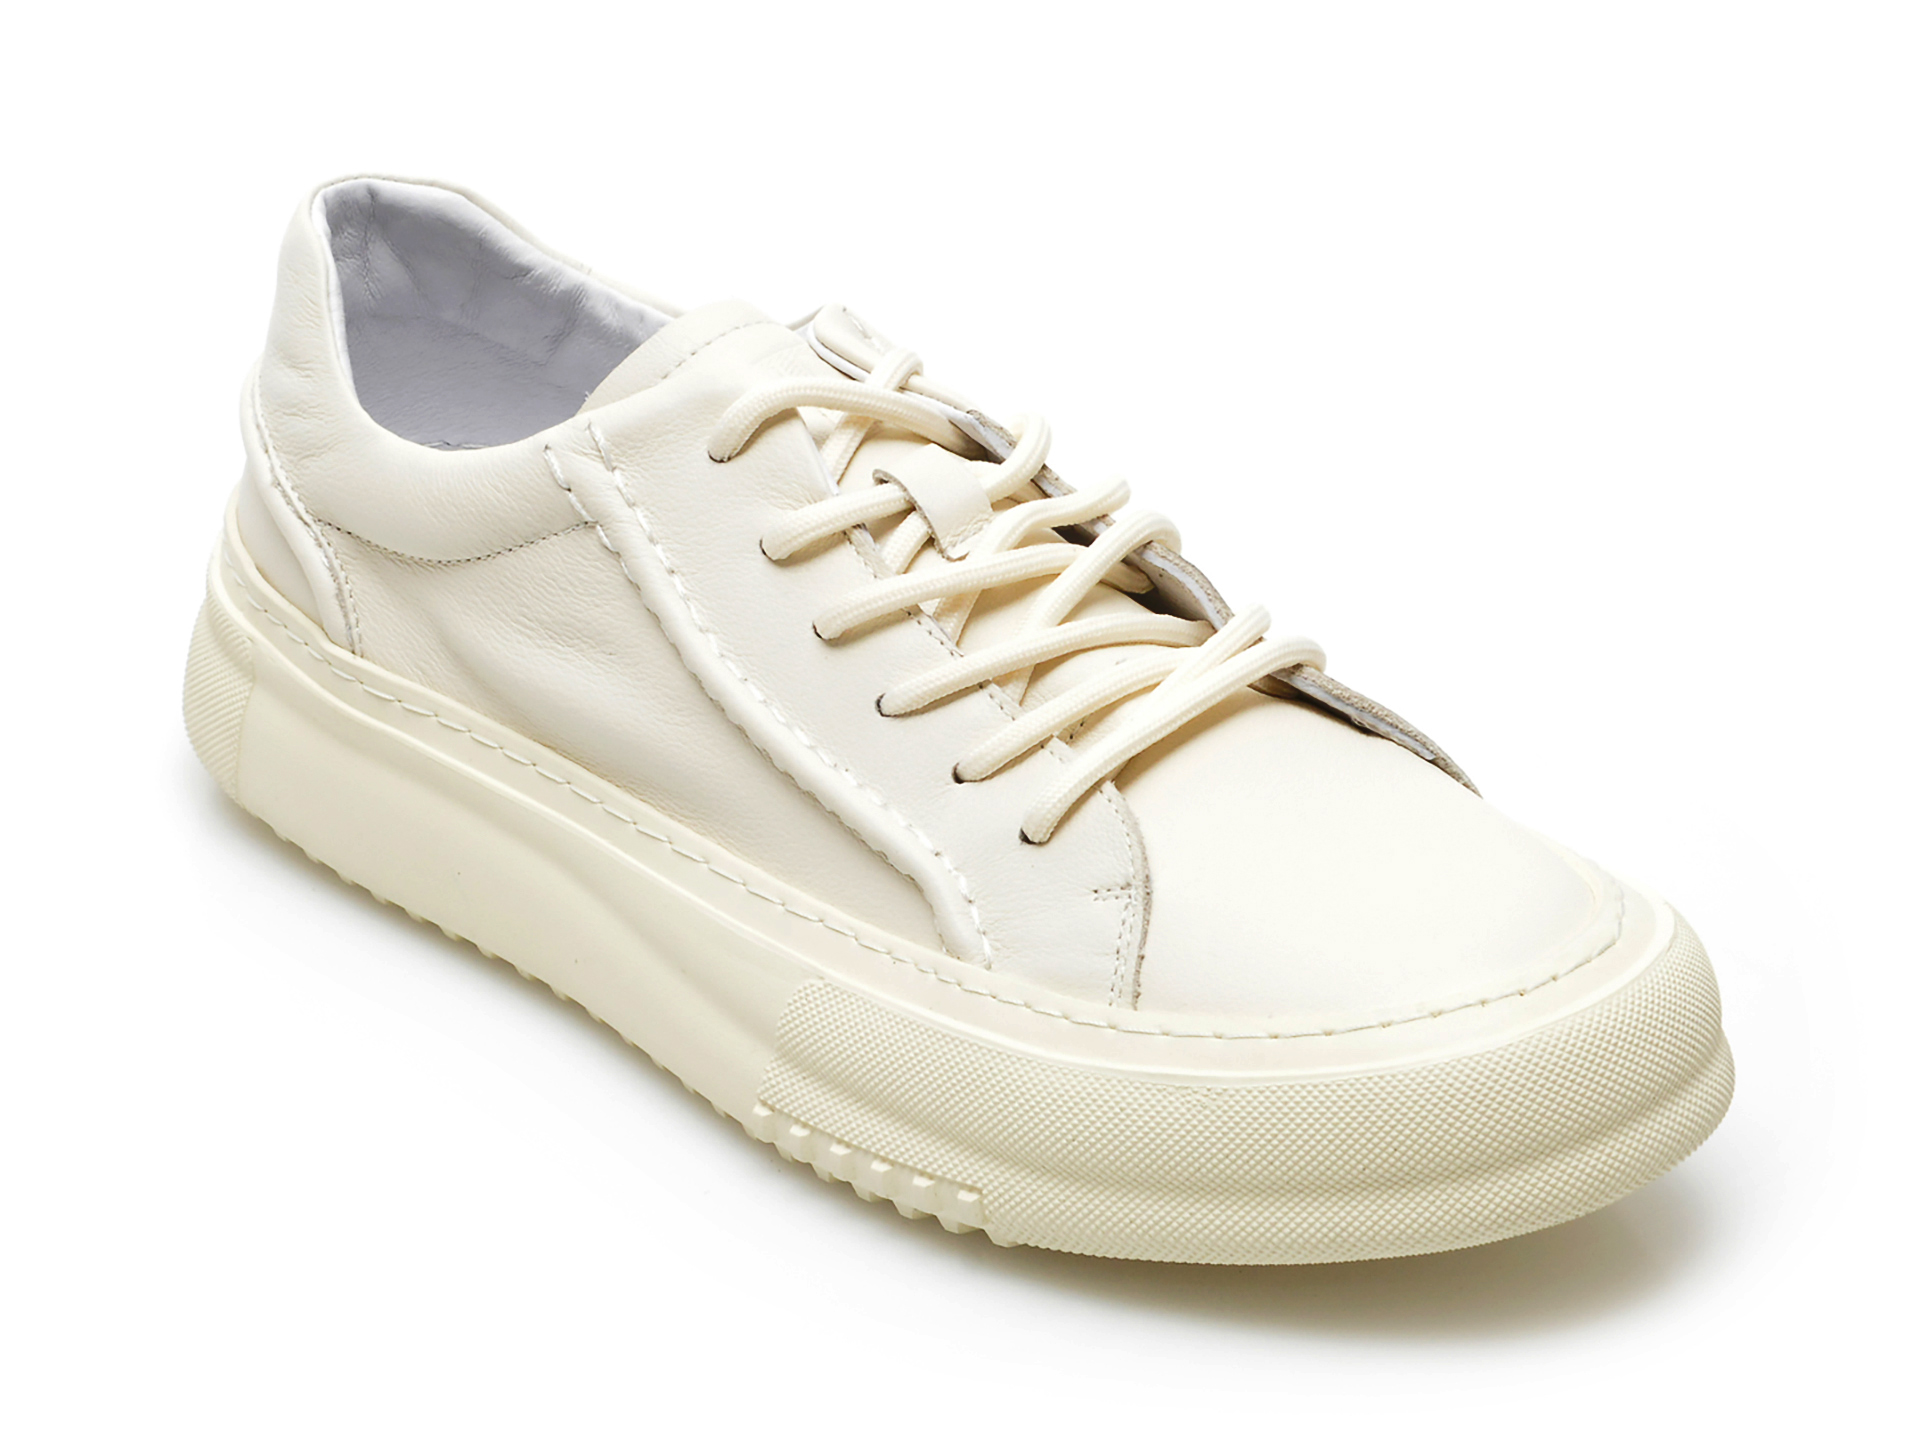 Pantofi OTTER albi, 909, din piele naturala Otter imagine 2022 13clothing.ro